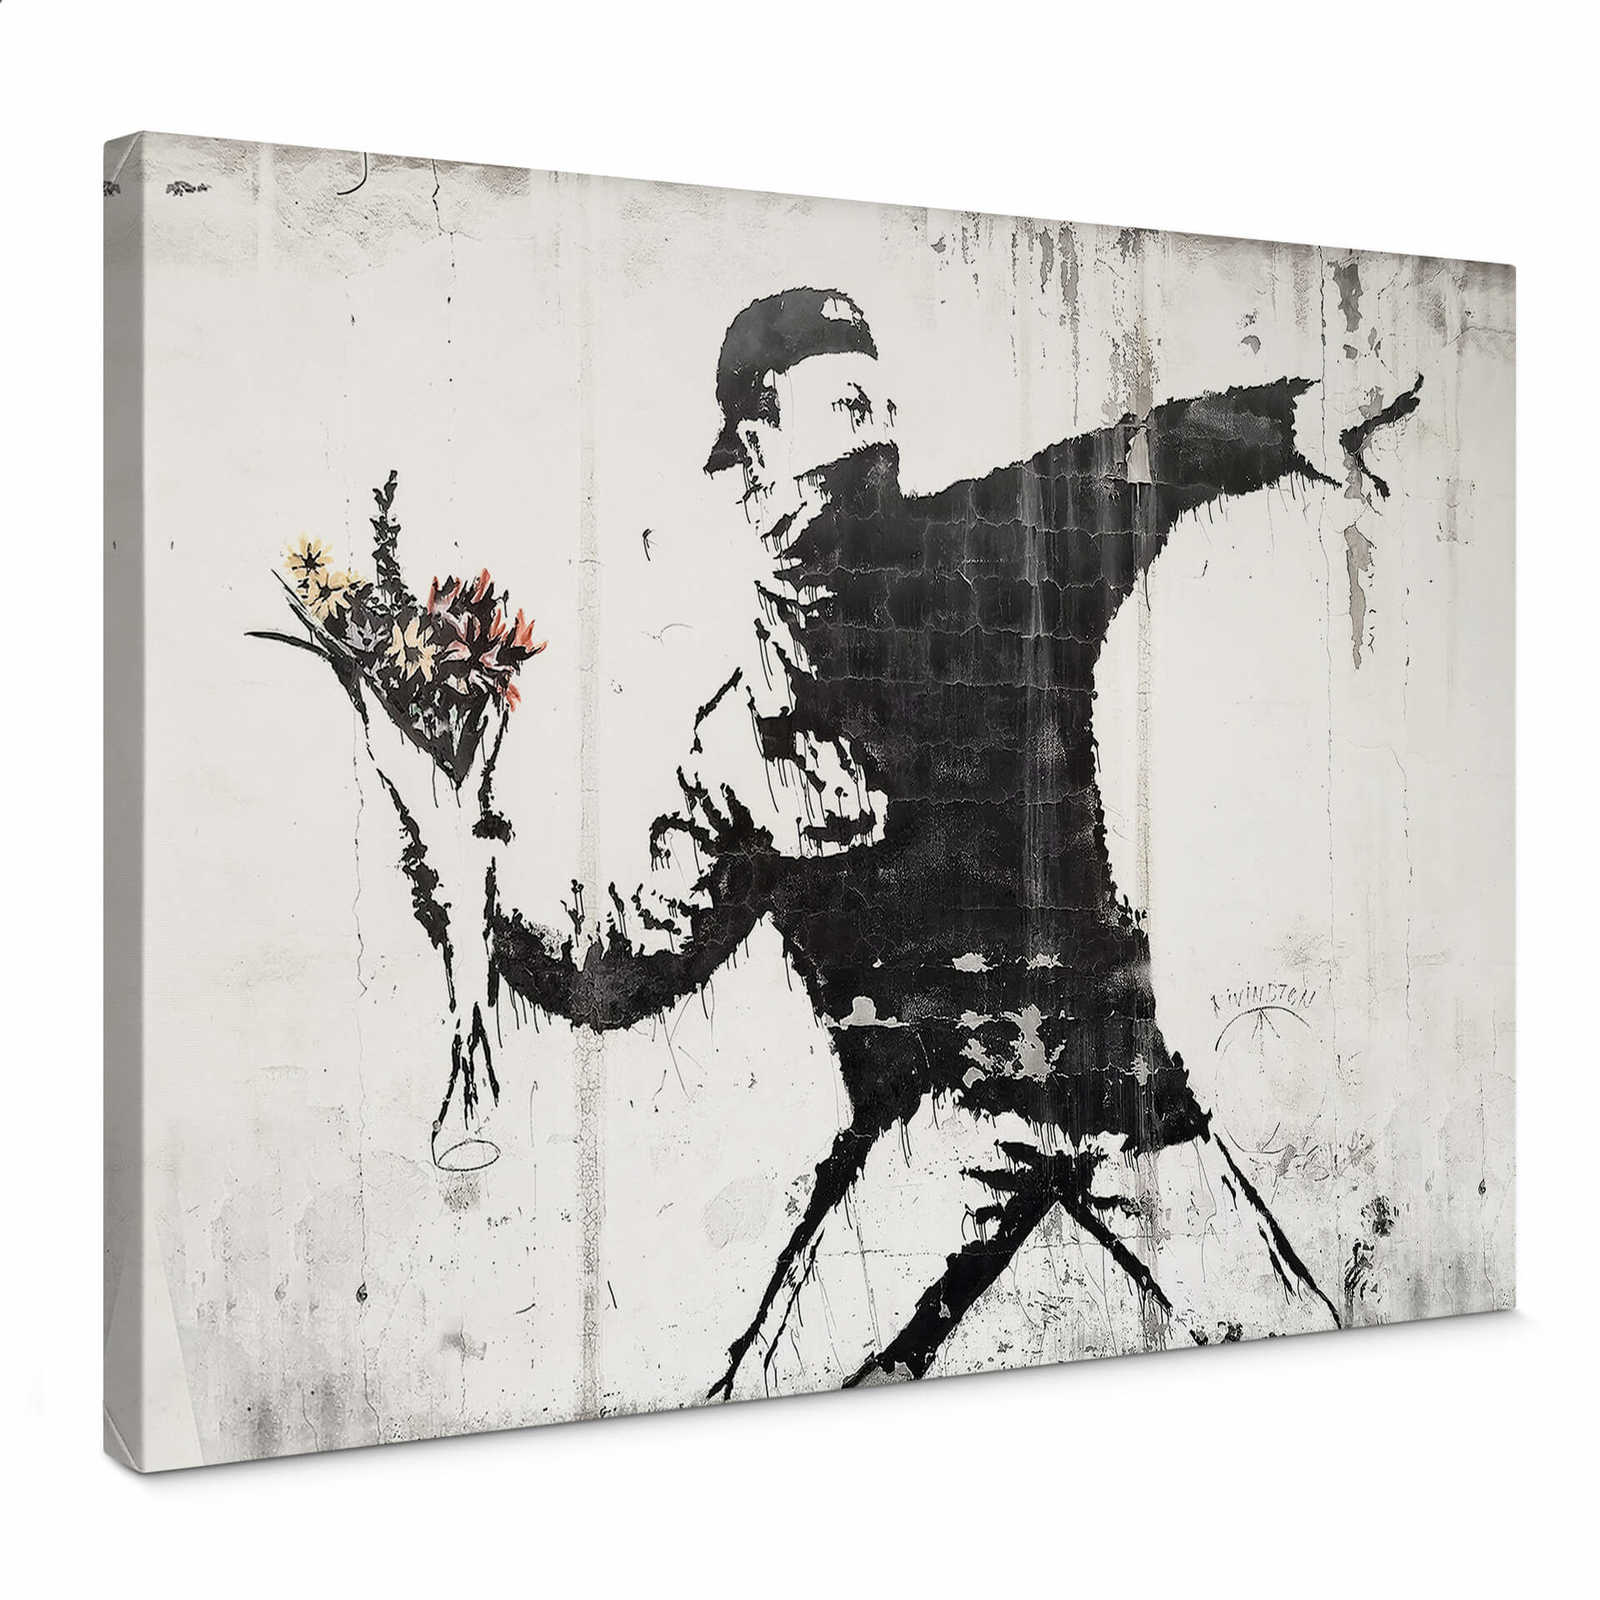         Banksy canvas print "Flower Thrower" graffiti style
    